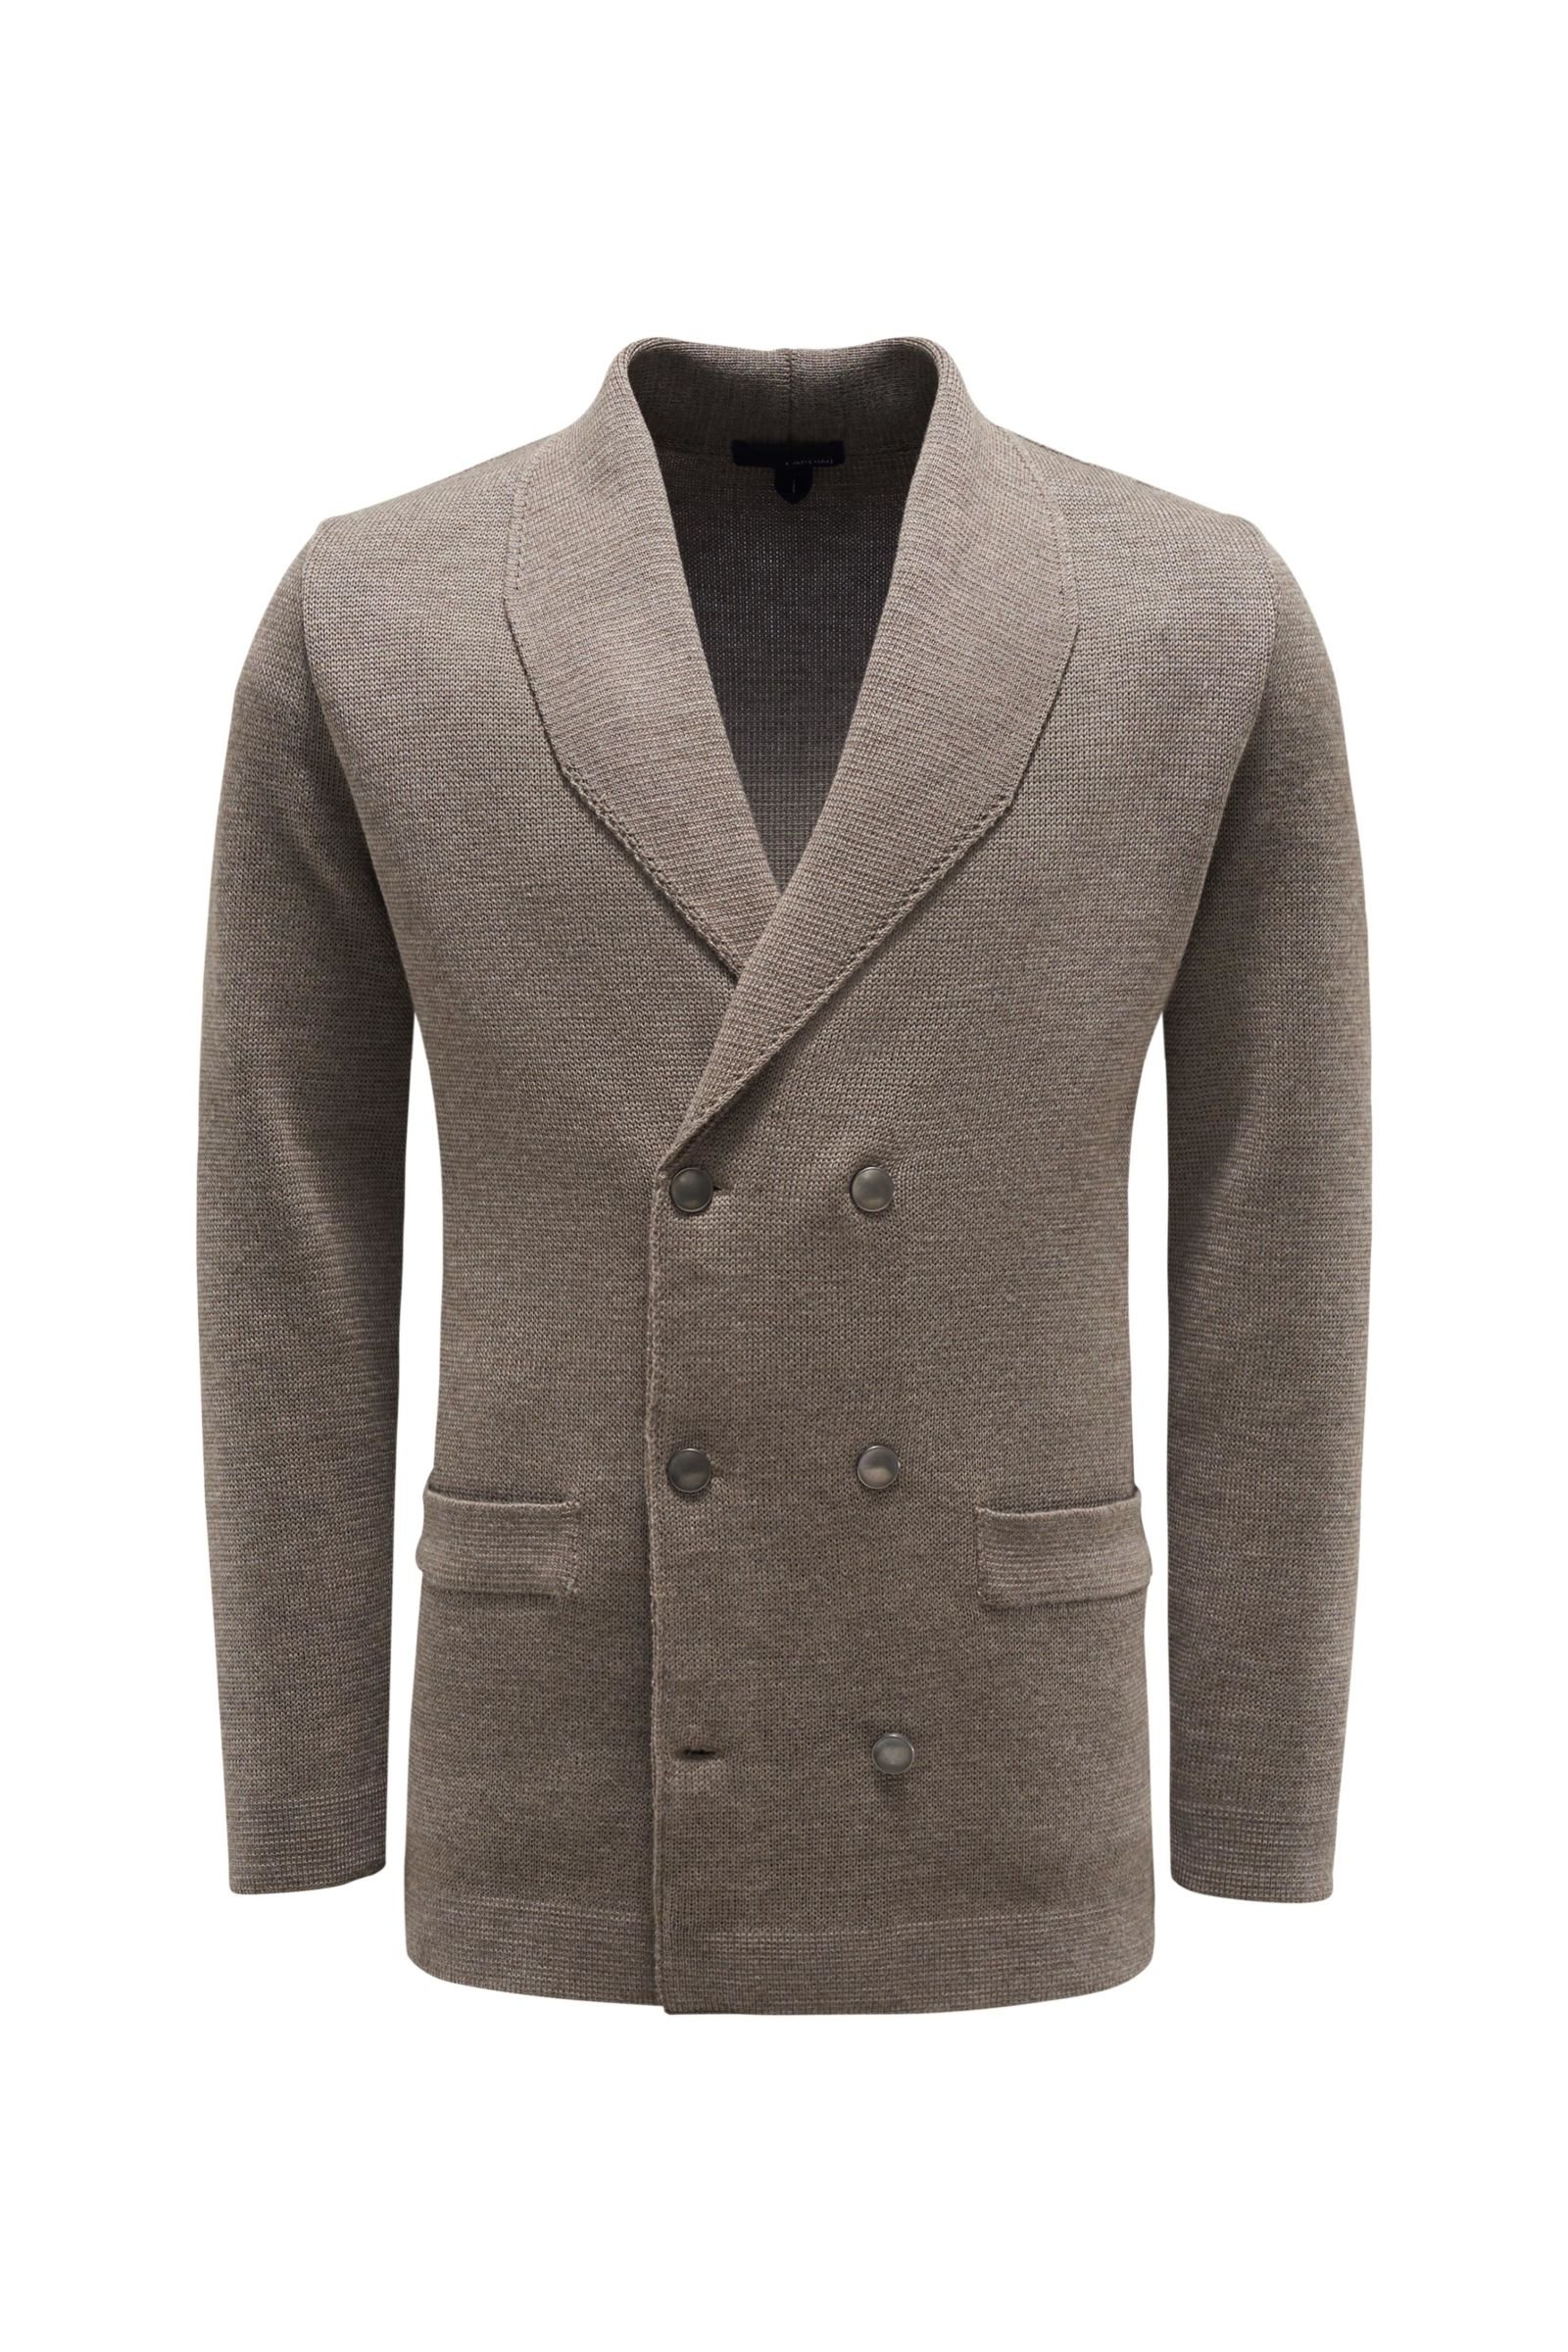 knit blazer grey-brown